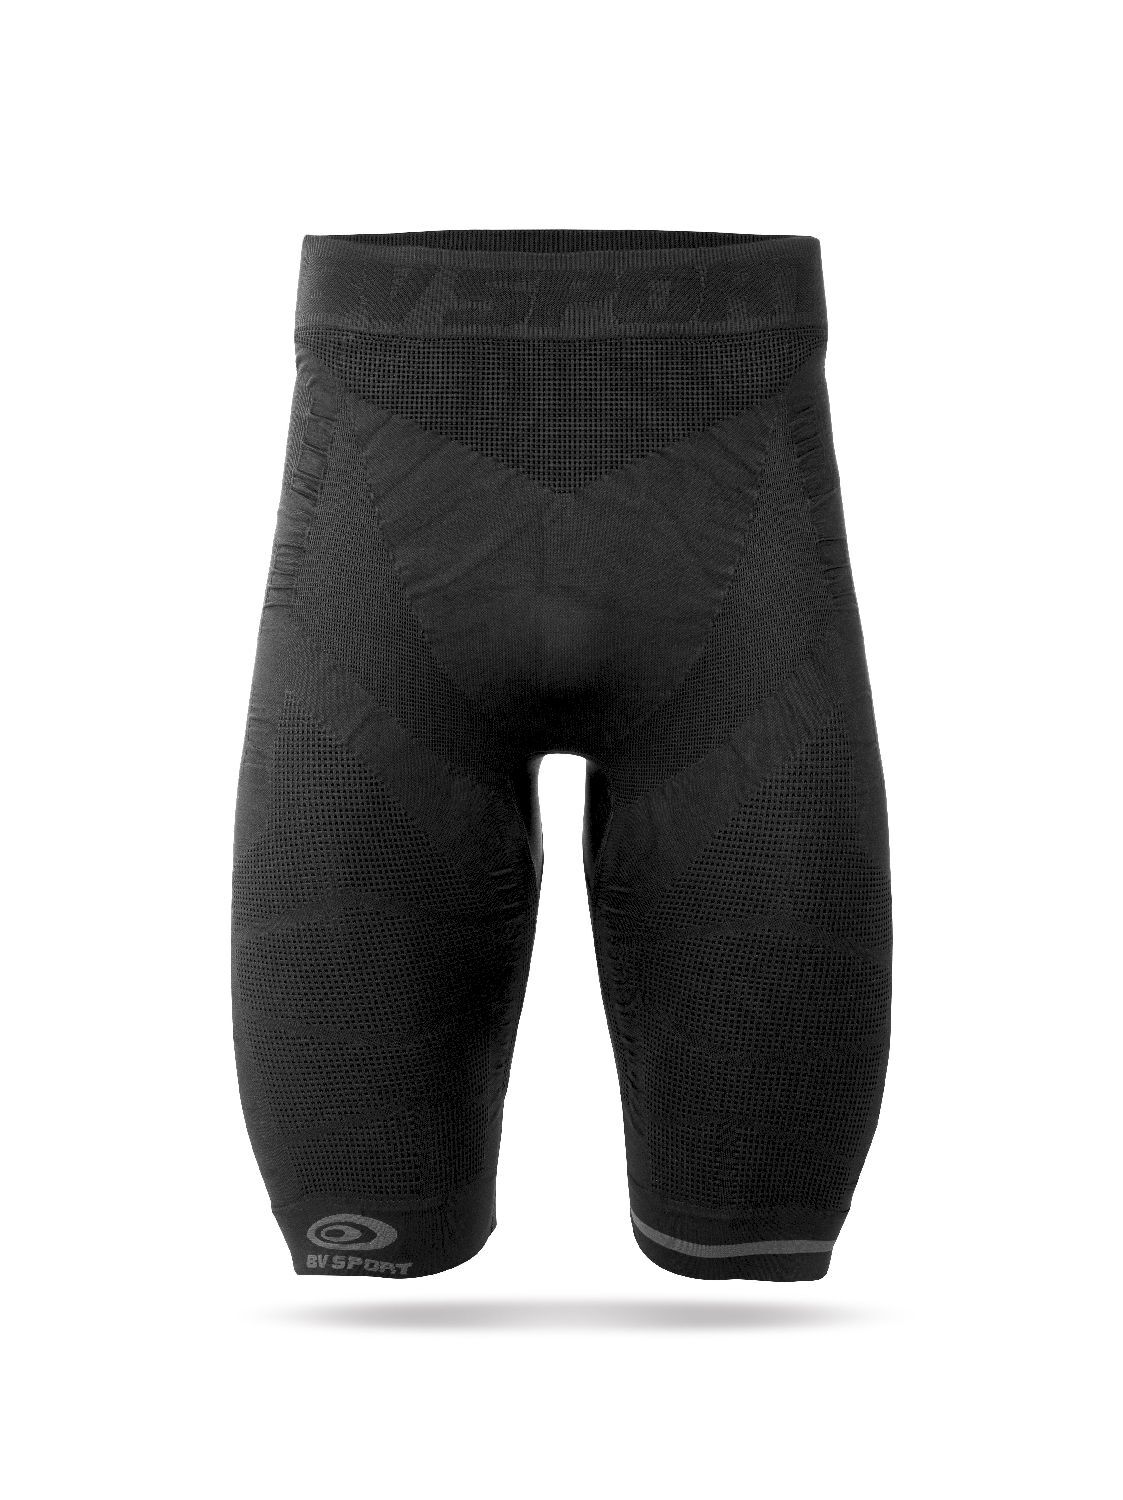 BV Sport CSX Evo2 - Running shorts - Men's